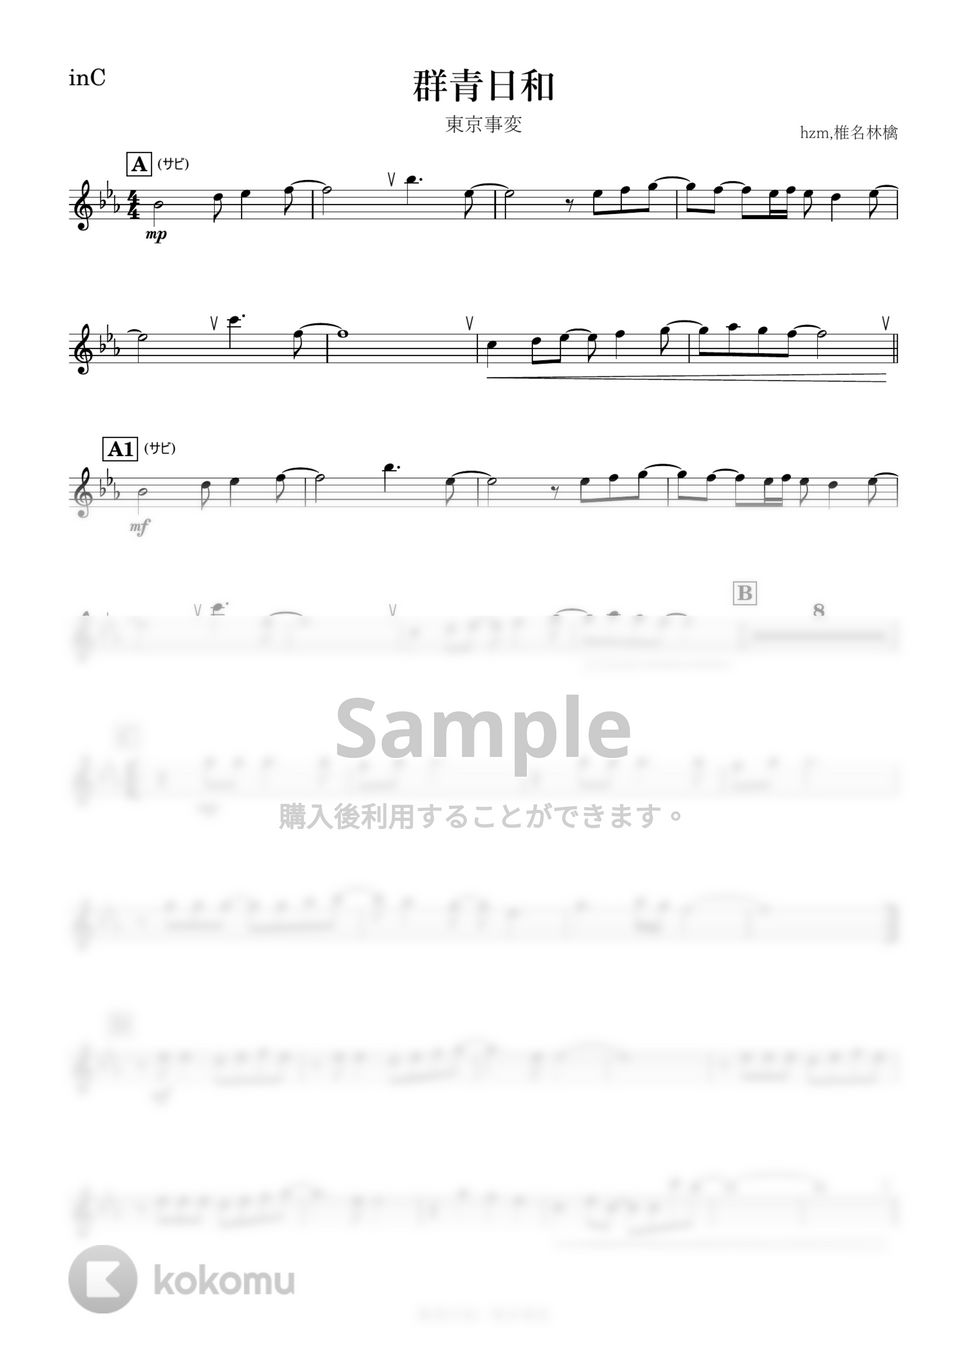 東京事変 - 群青日和 (C) by kanamusic